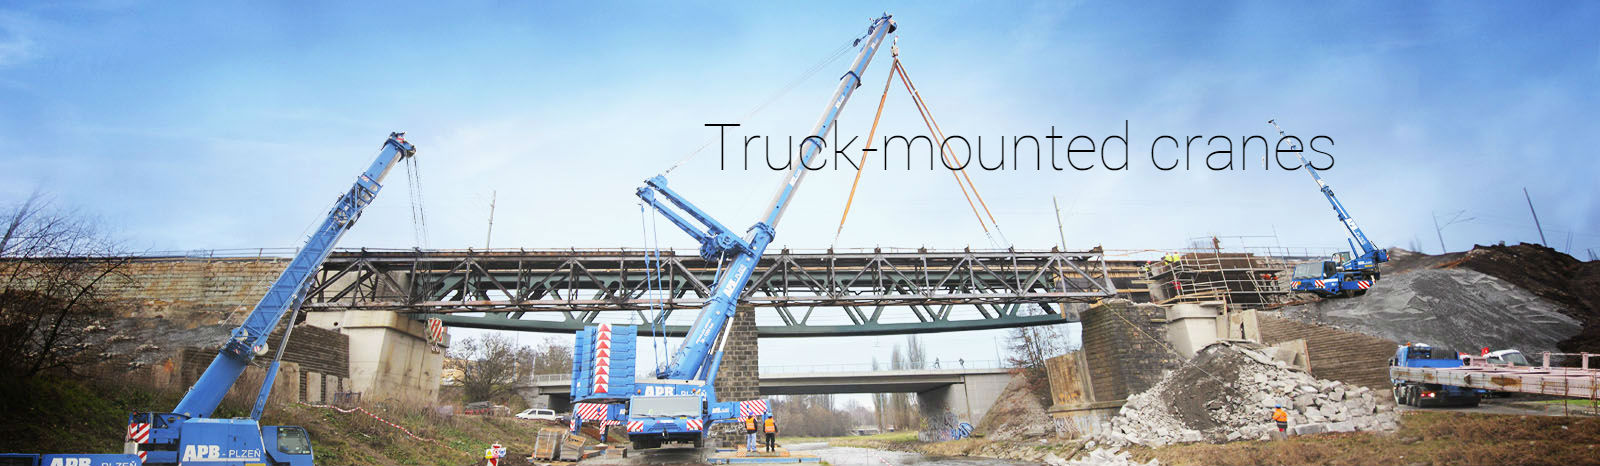 Truck-mounted cranes